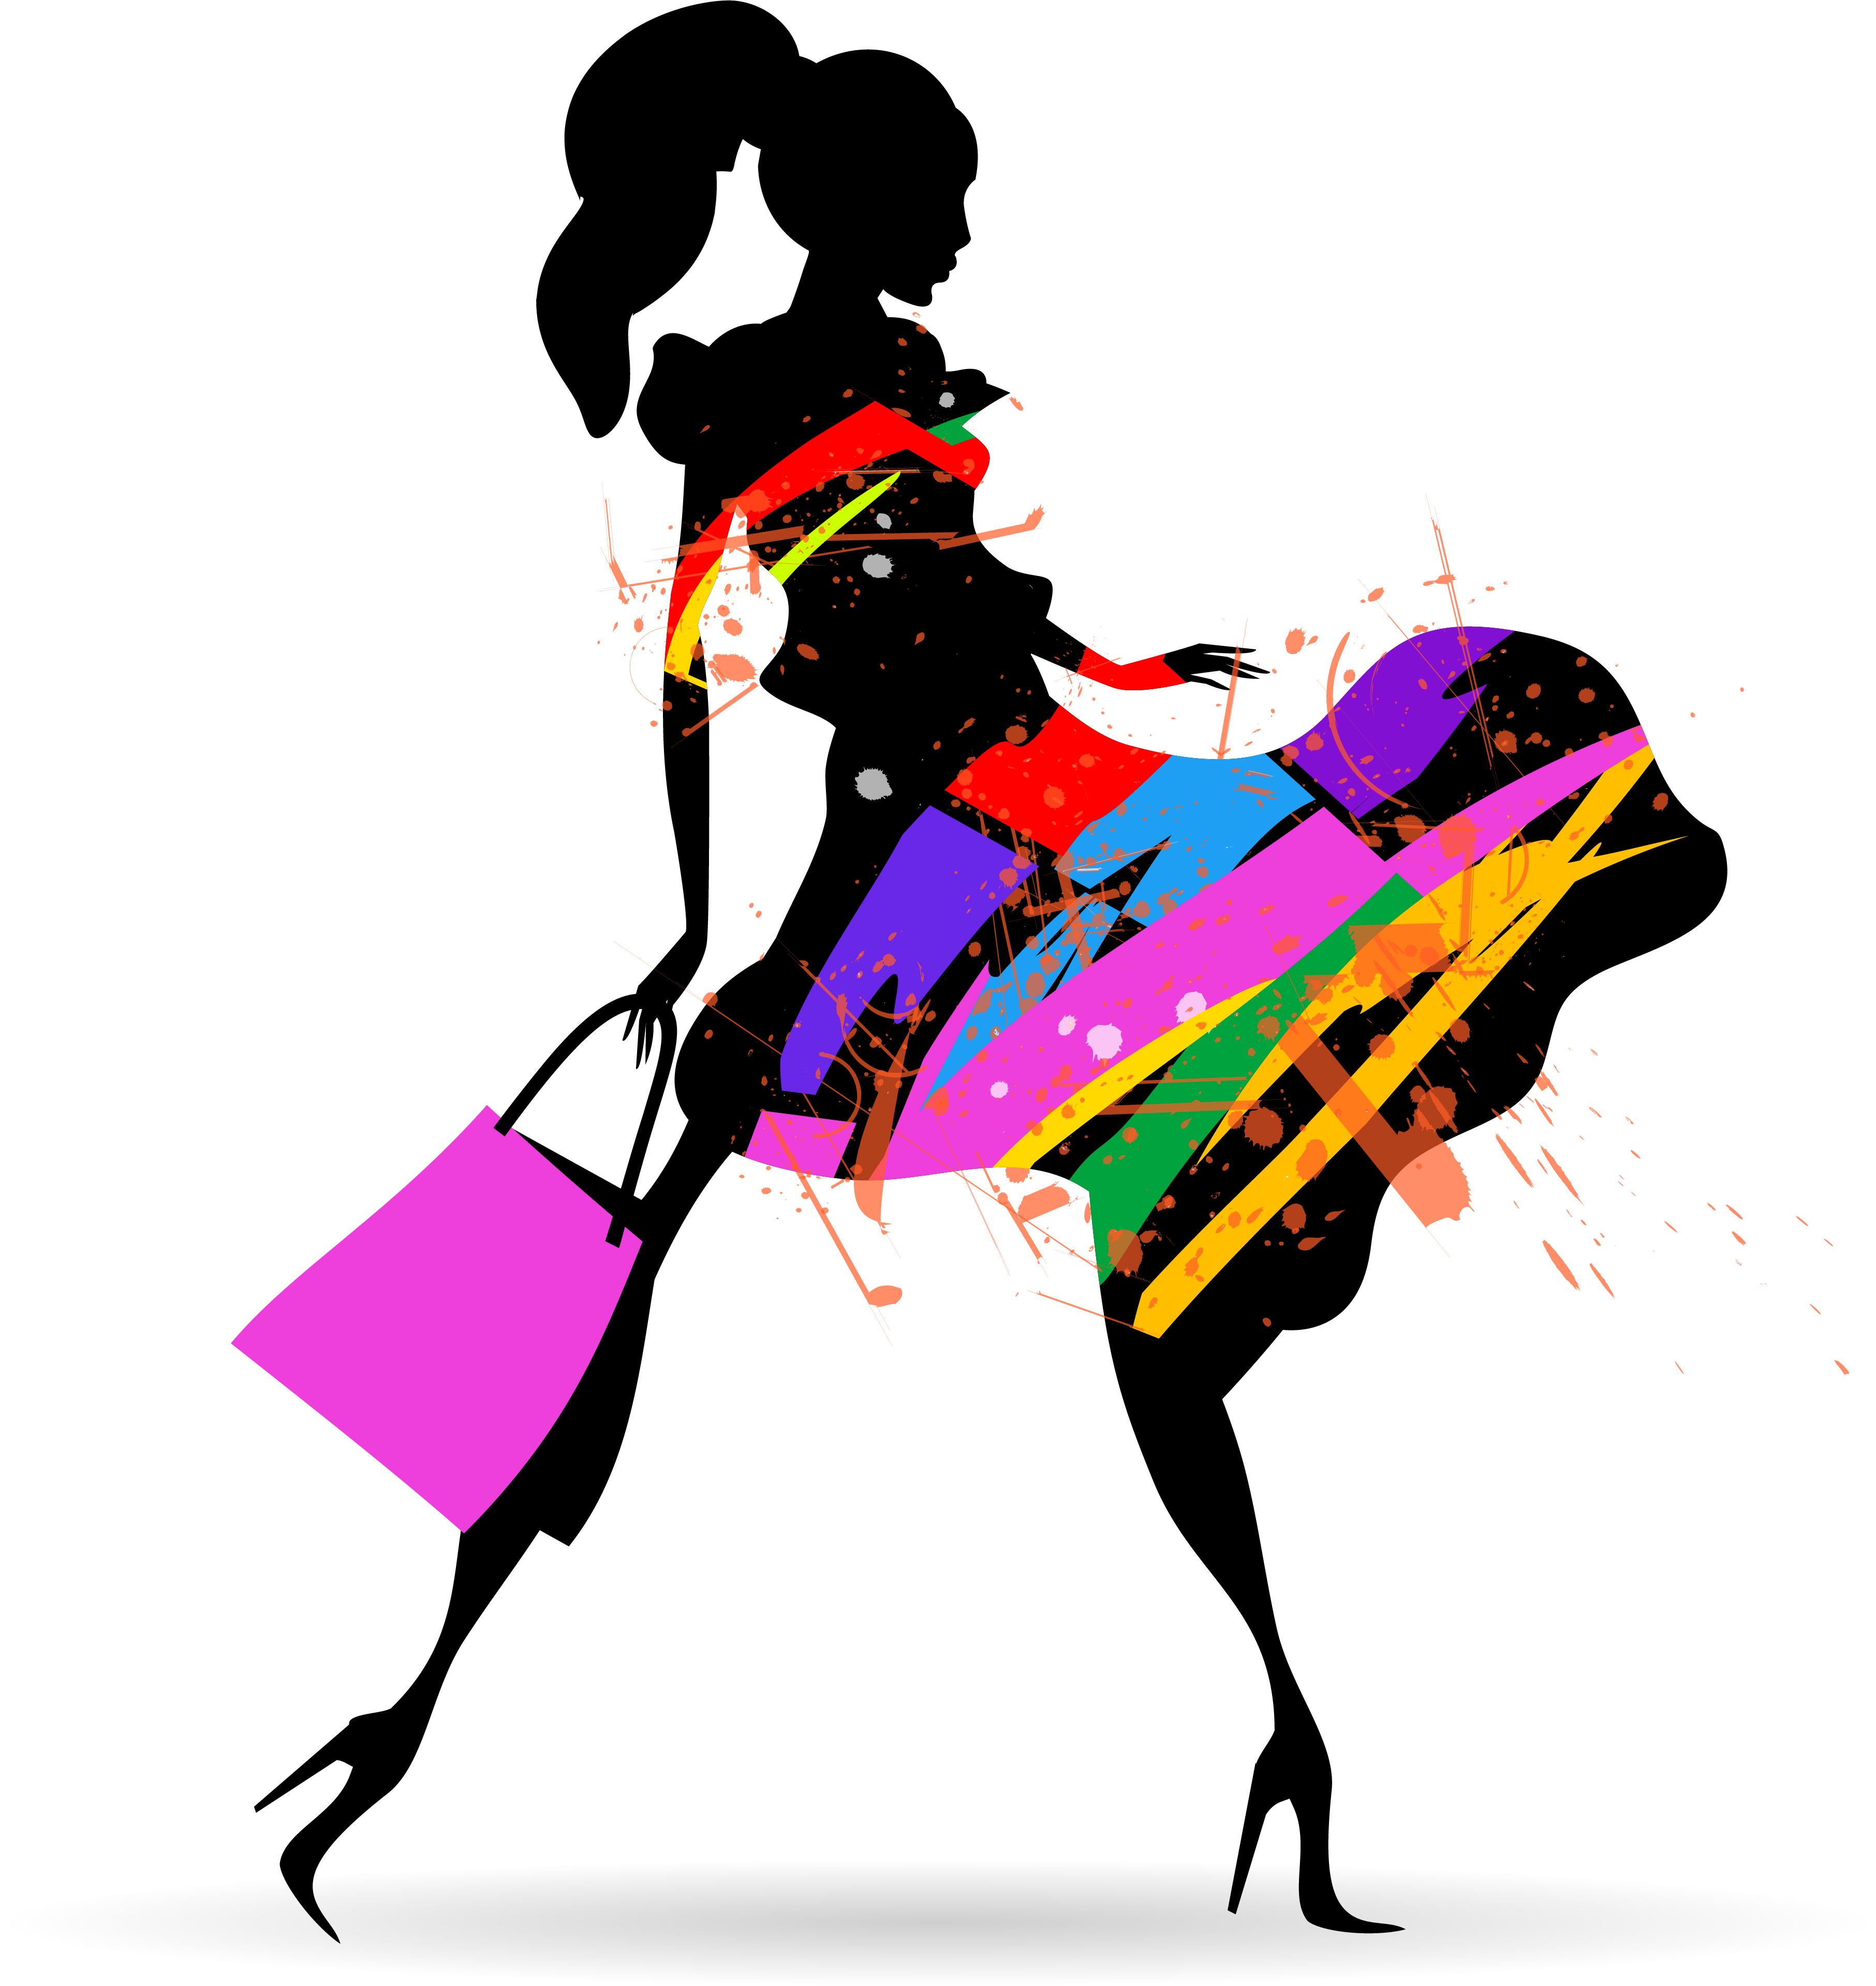 fashion design illustration vector free download